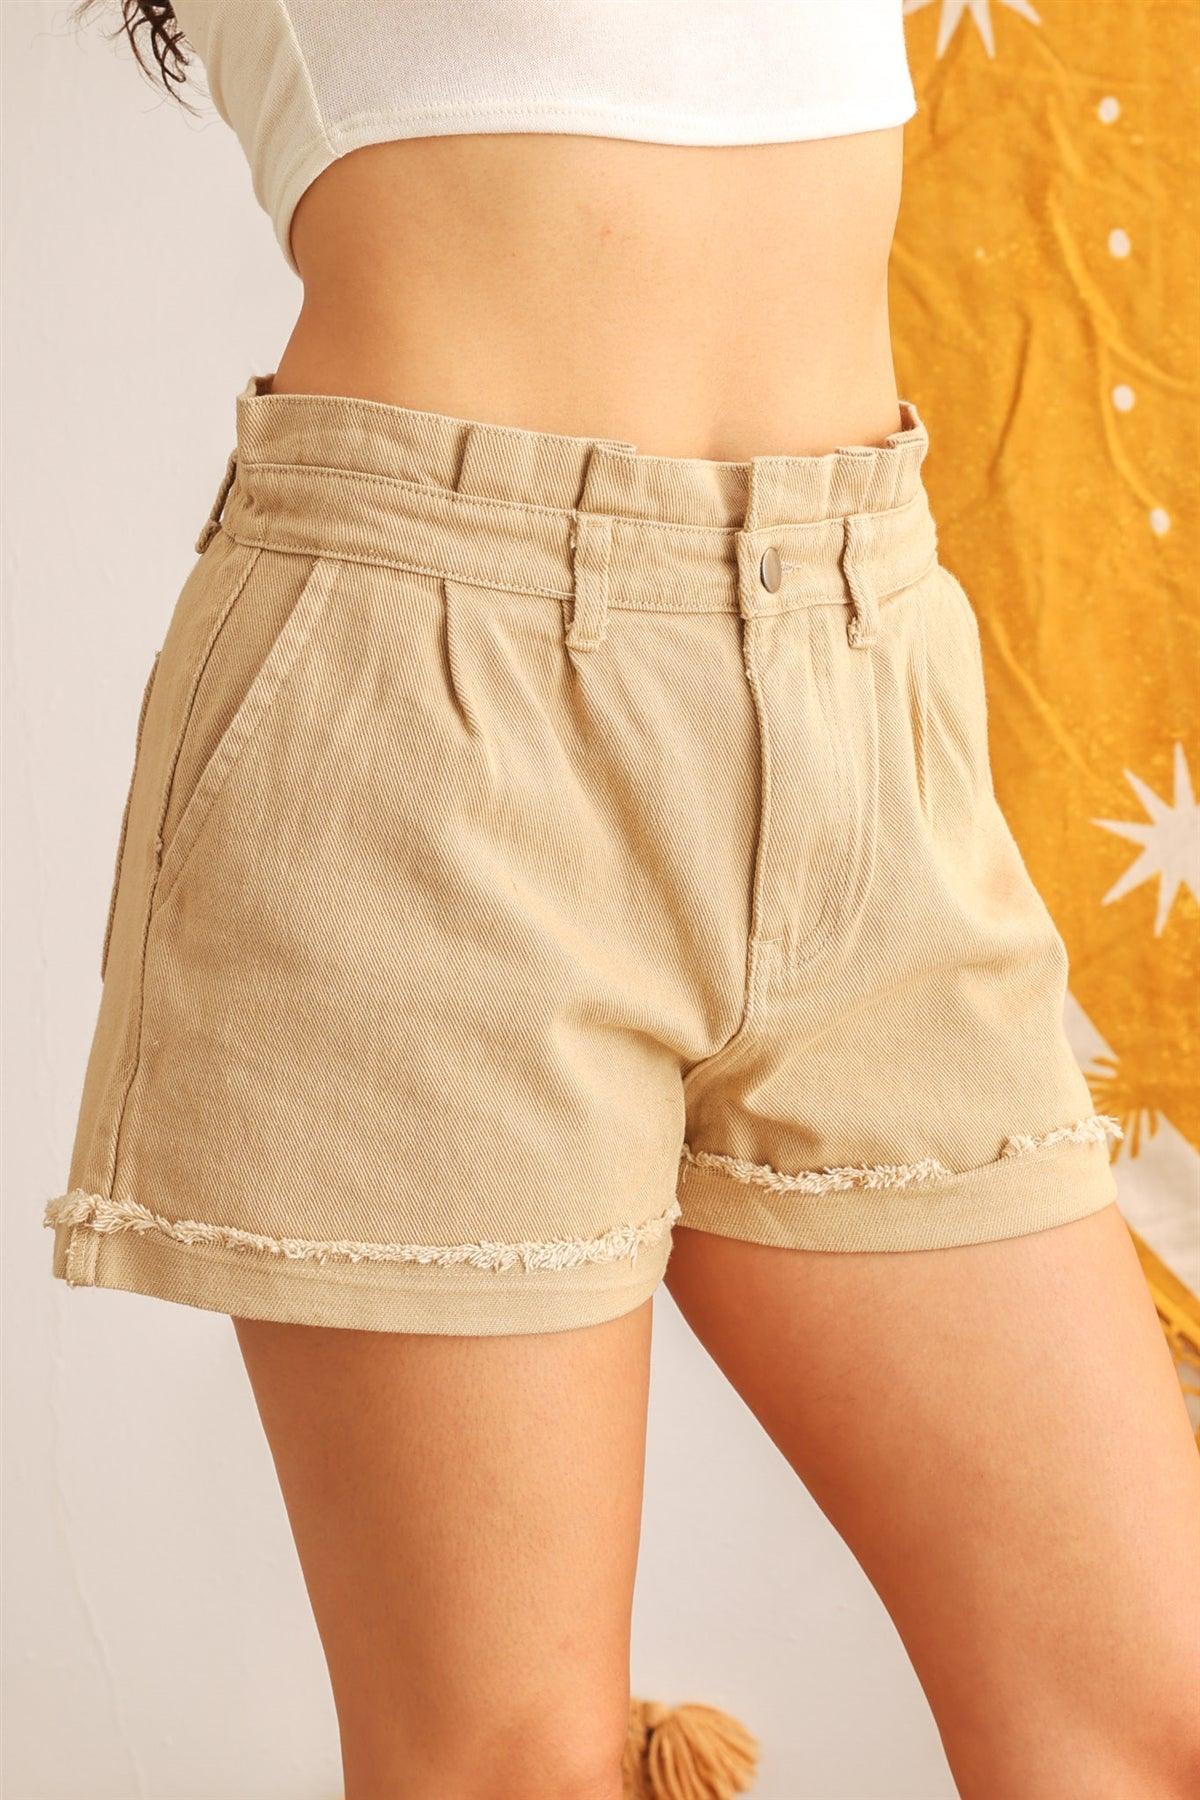 Taupe Cotton High Waist Four Pocket Shorts /2-2-2